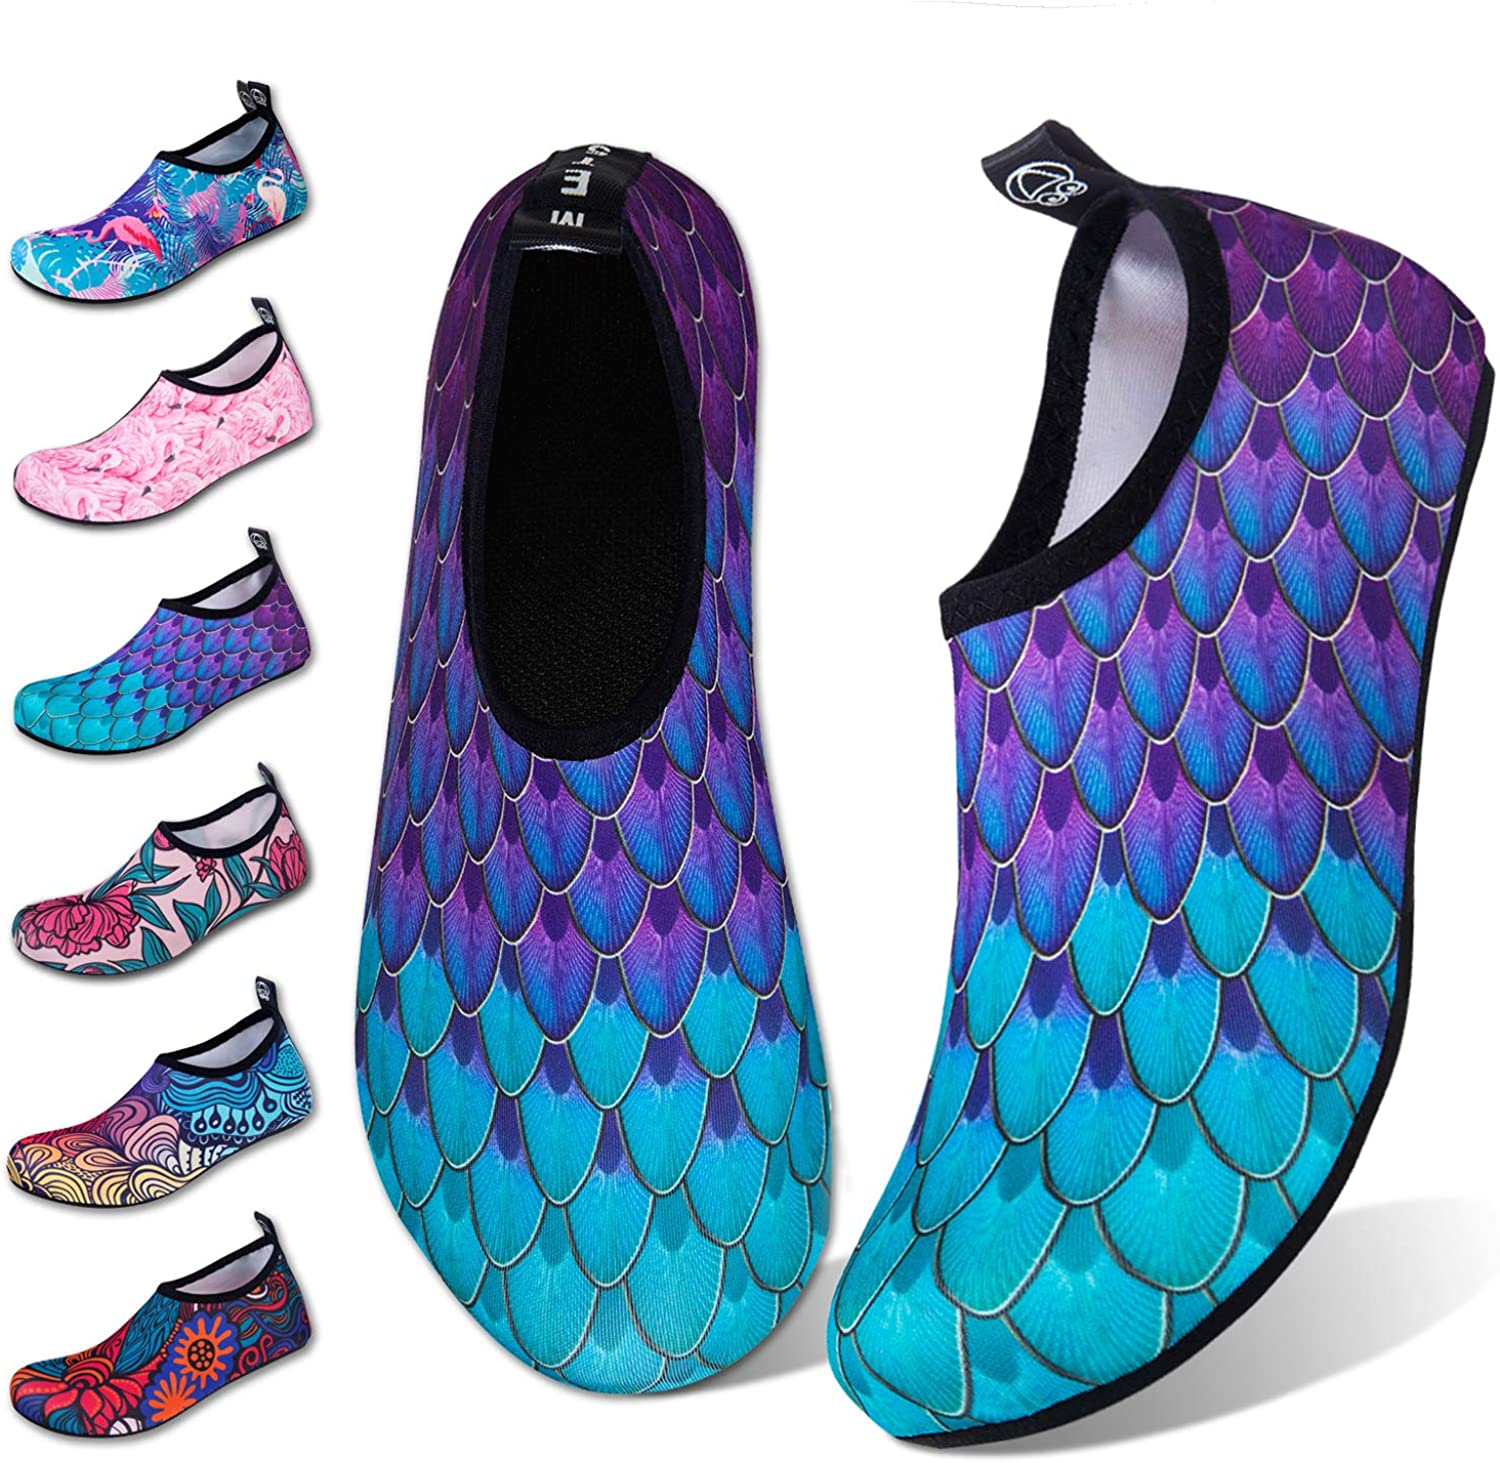 YALOX Water Shoes Swim Shoes Water Socks Womens Mens Beach Swimming Aqua Socks Quick-Dry Shoes Surfing Yoga Pool Exercise